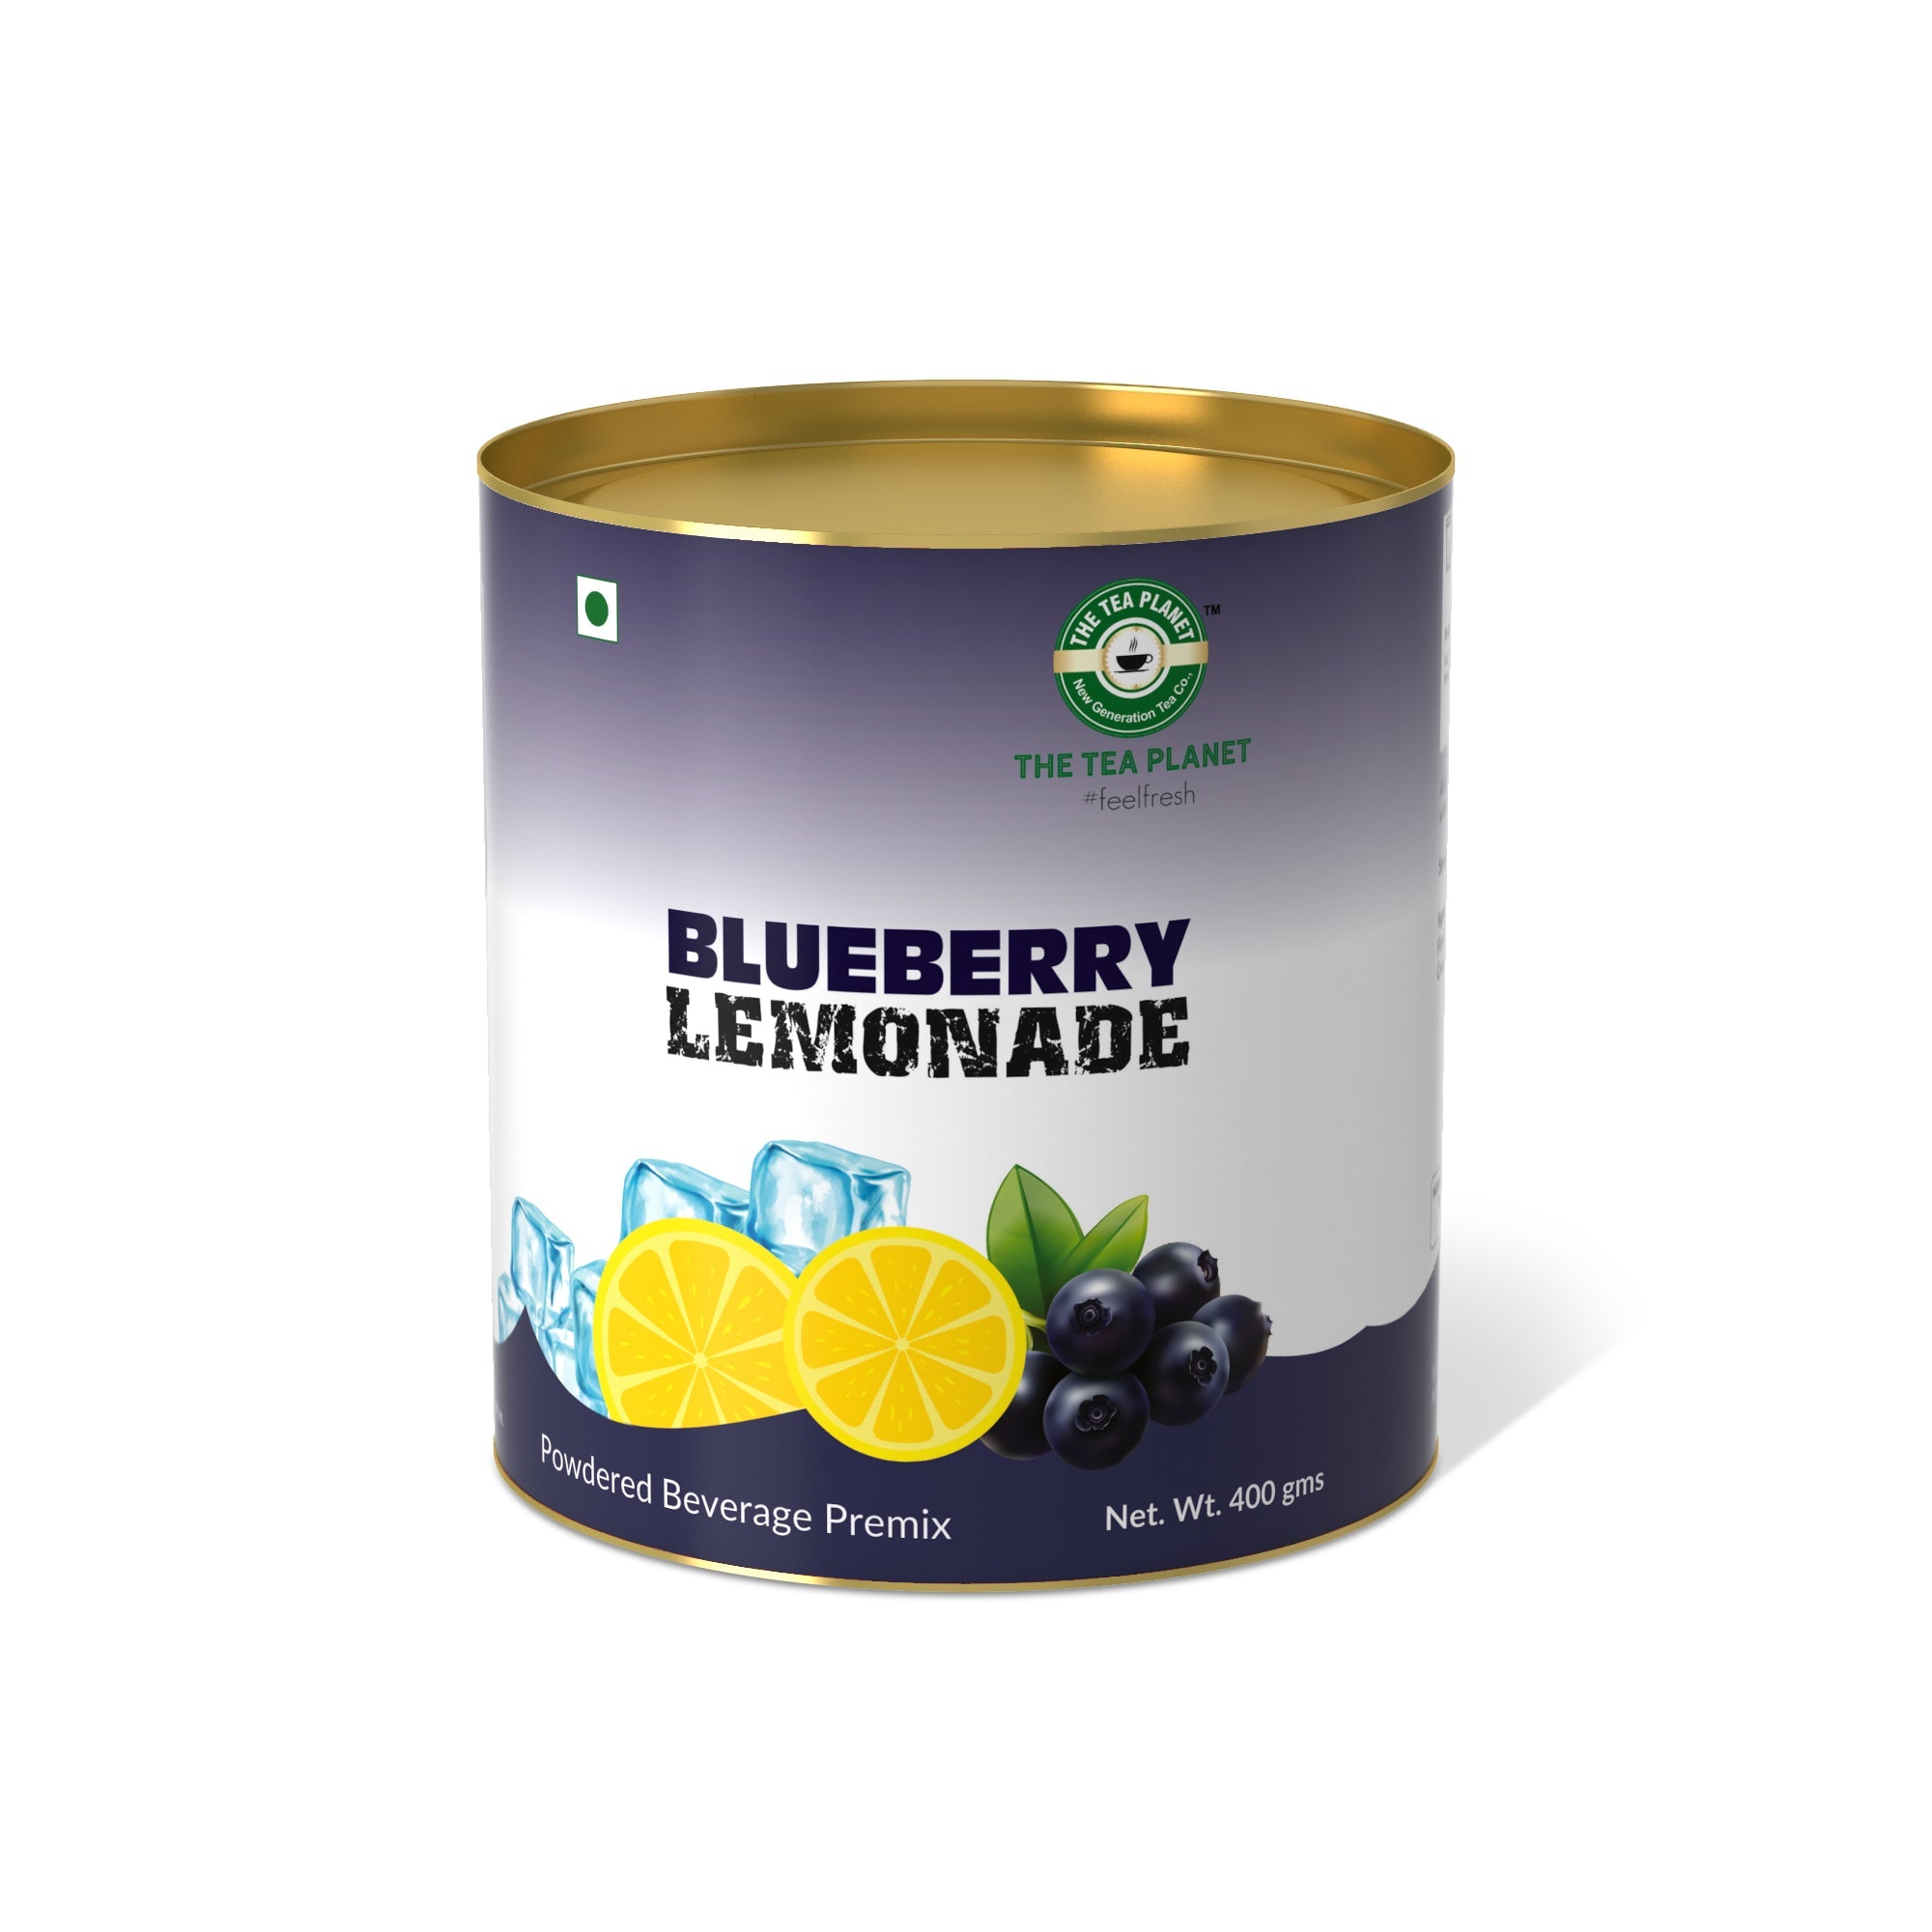 Blueberry Lemonade Premix - 250 gms